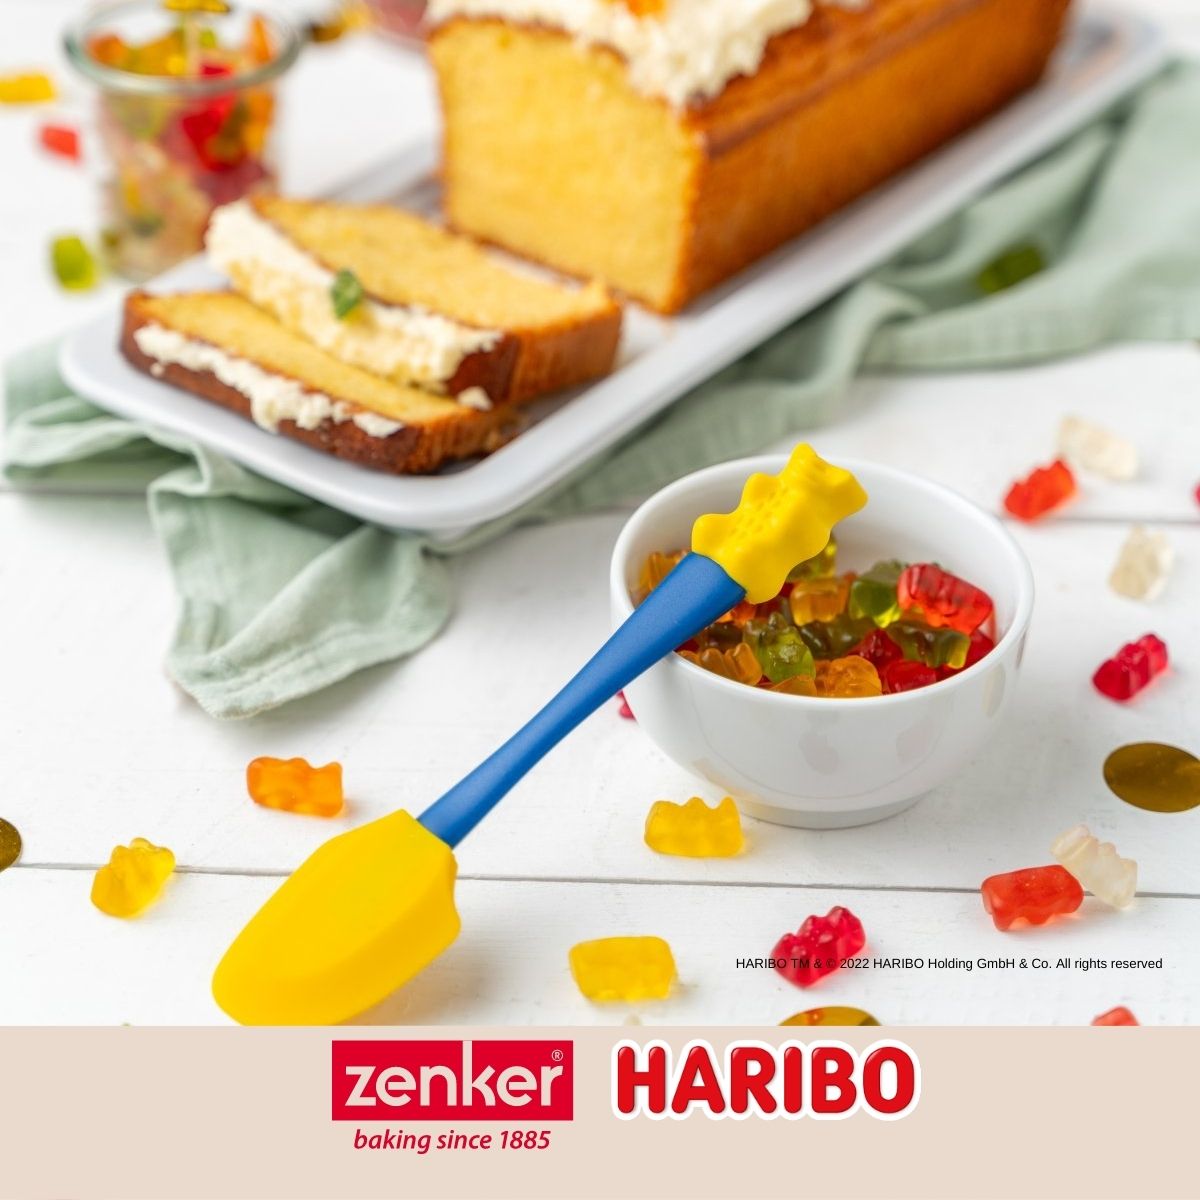 Spatule de cuisine et de pâtisserie en silicone 18 cm Zenker Haribo